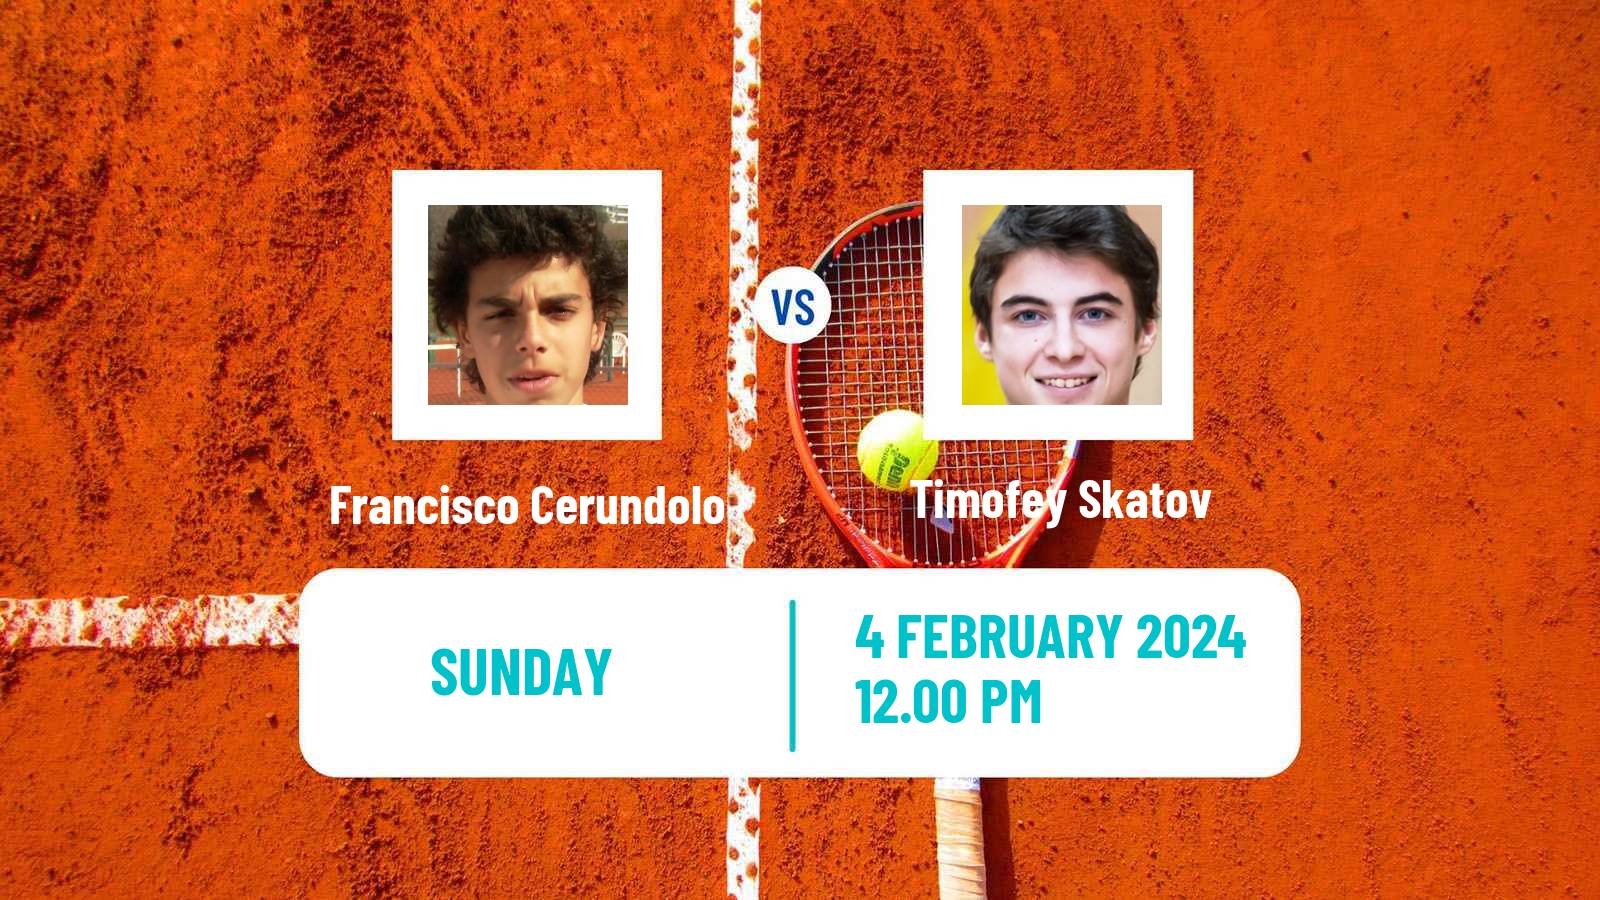 Tennis Davis Cup World Group Francisco Cerundolo - Timofey Skatov